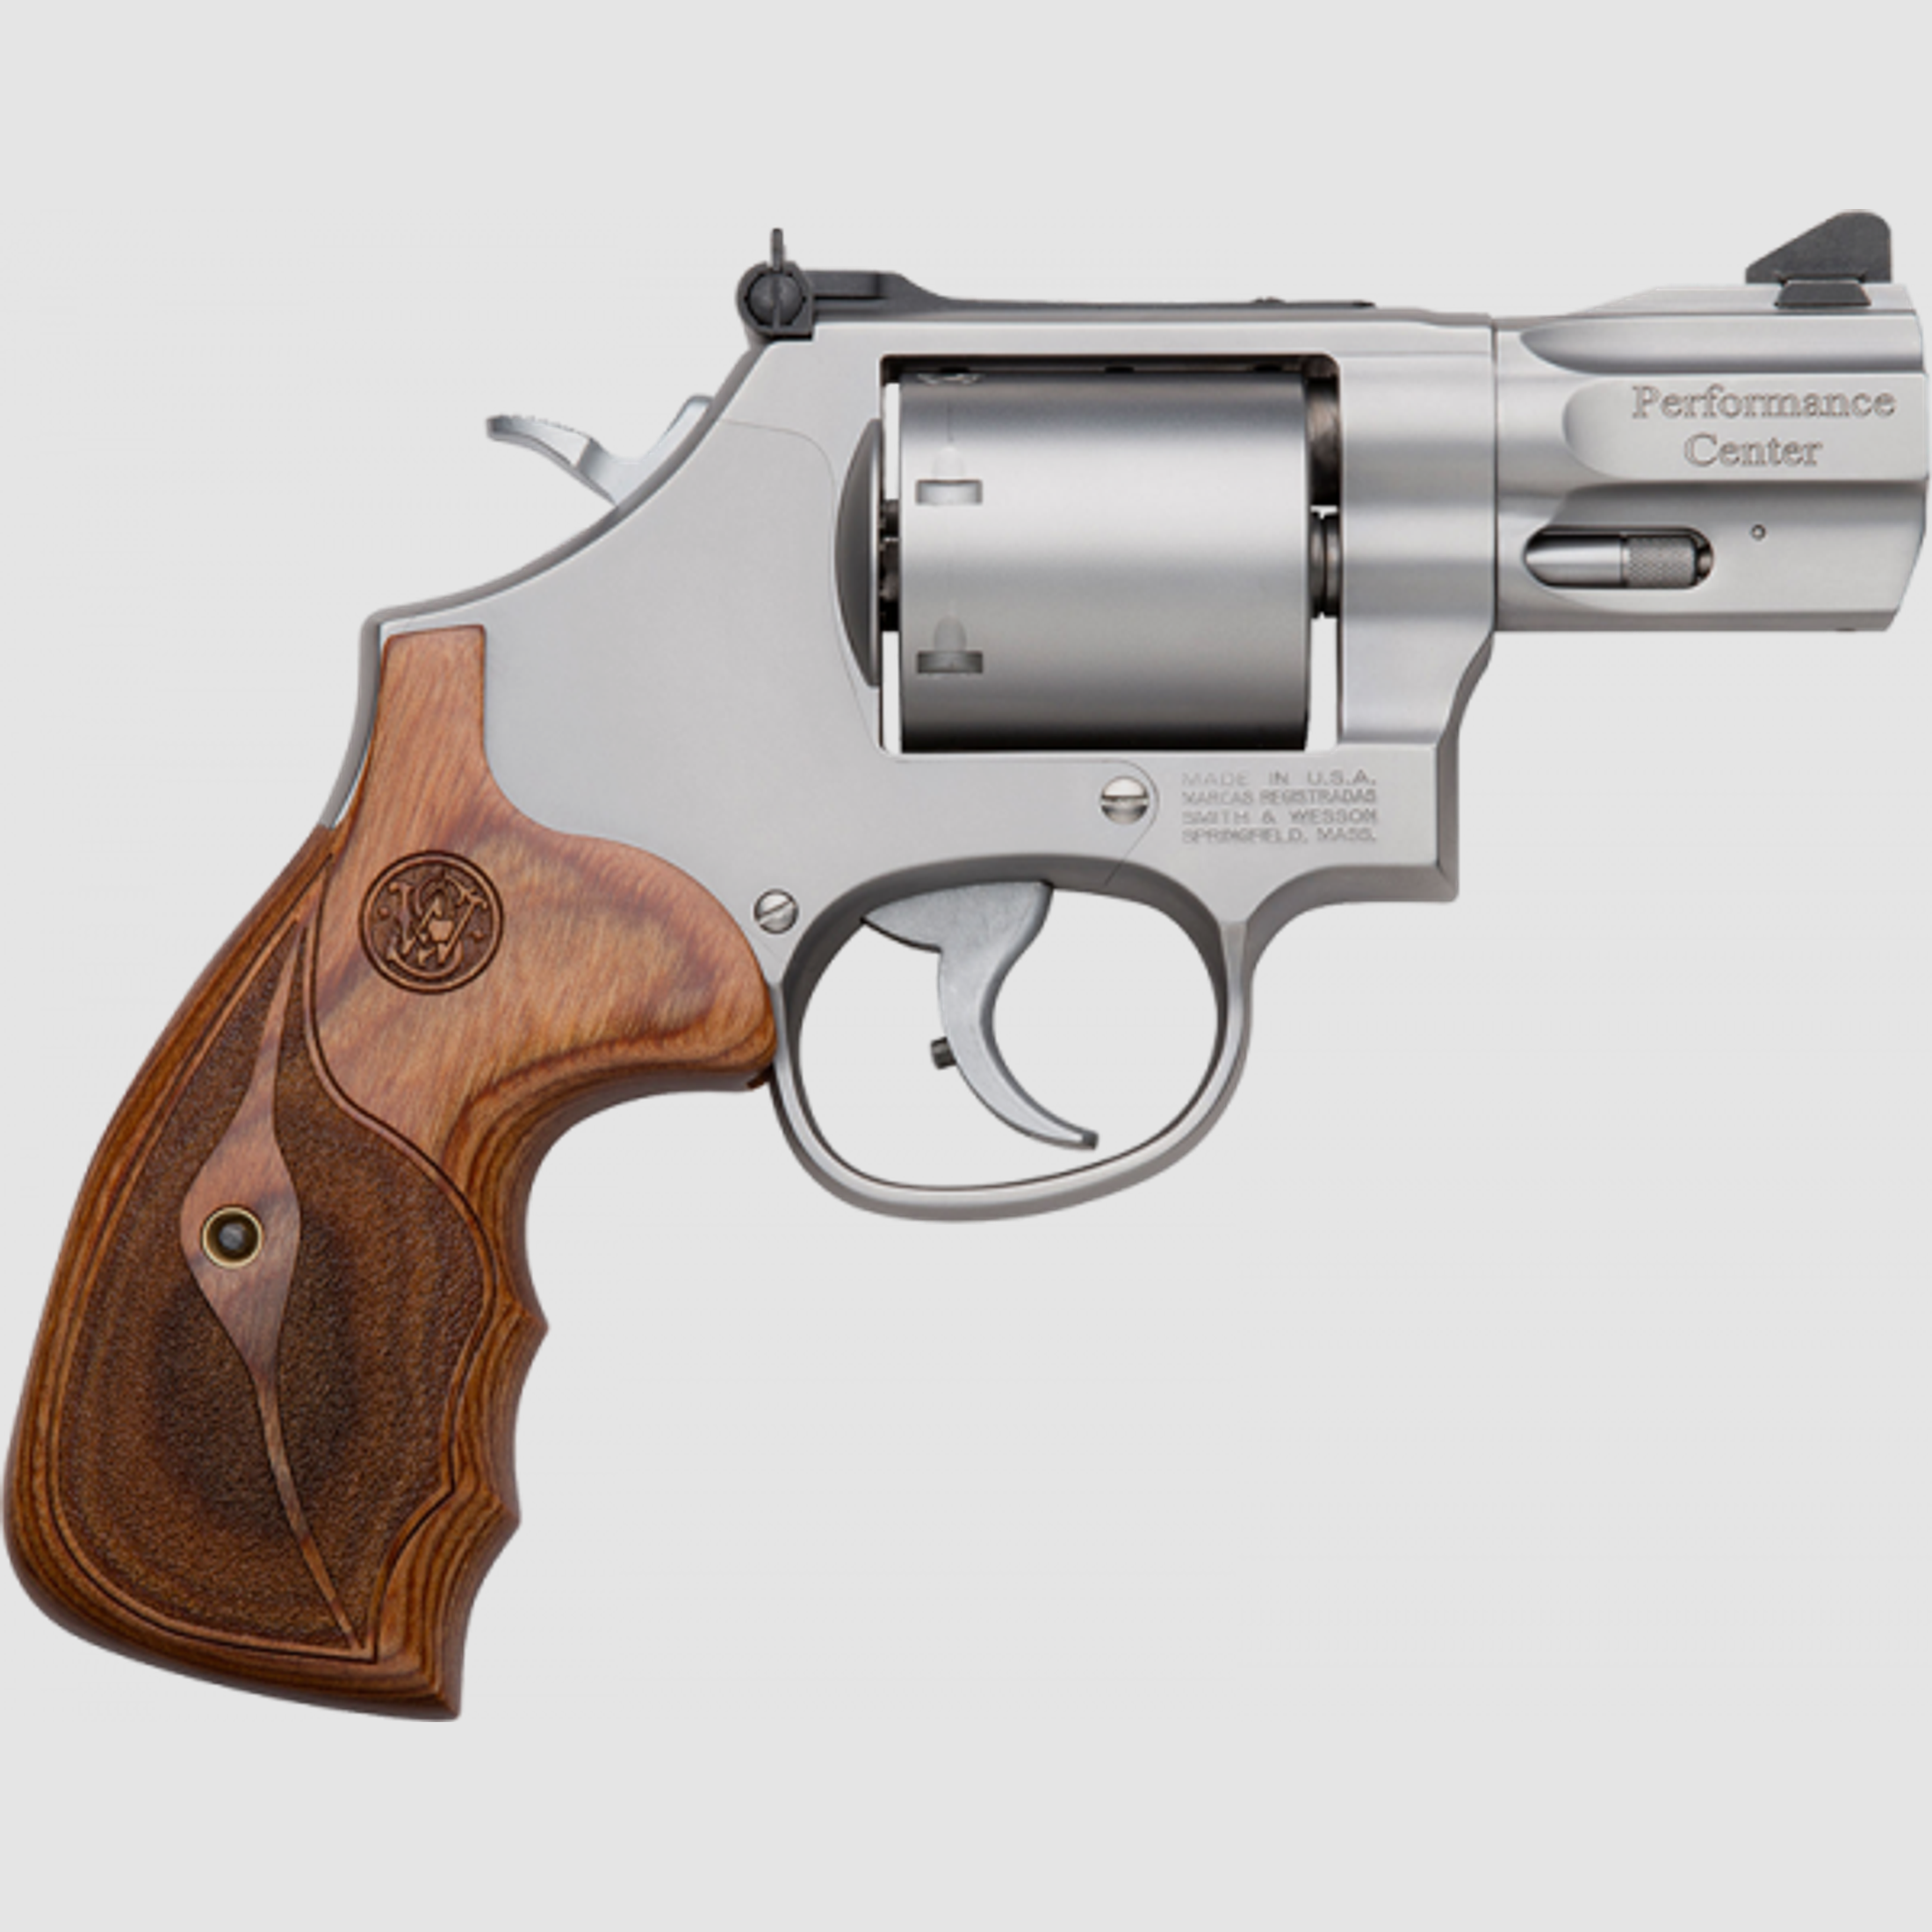 Smith & Wesson Model 686 Performance Center Revolver